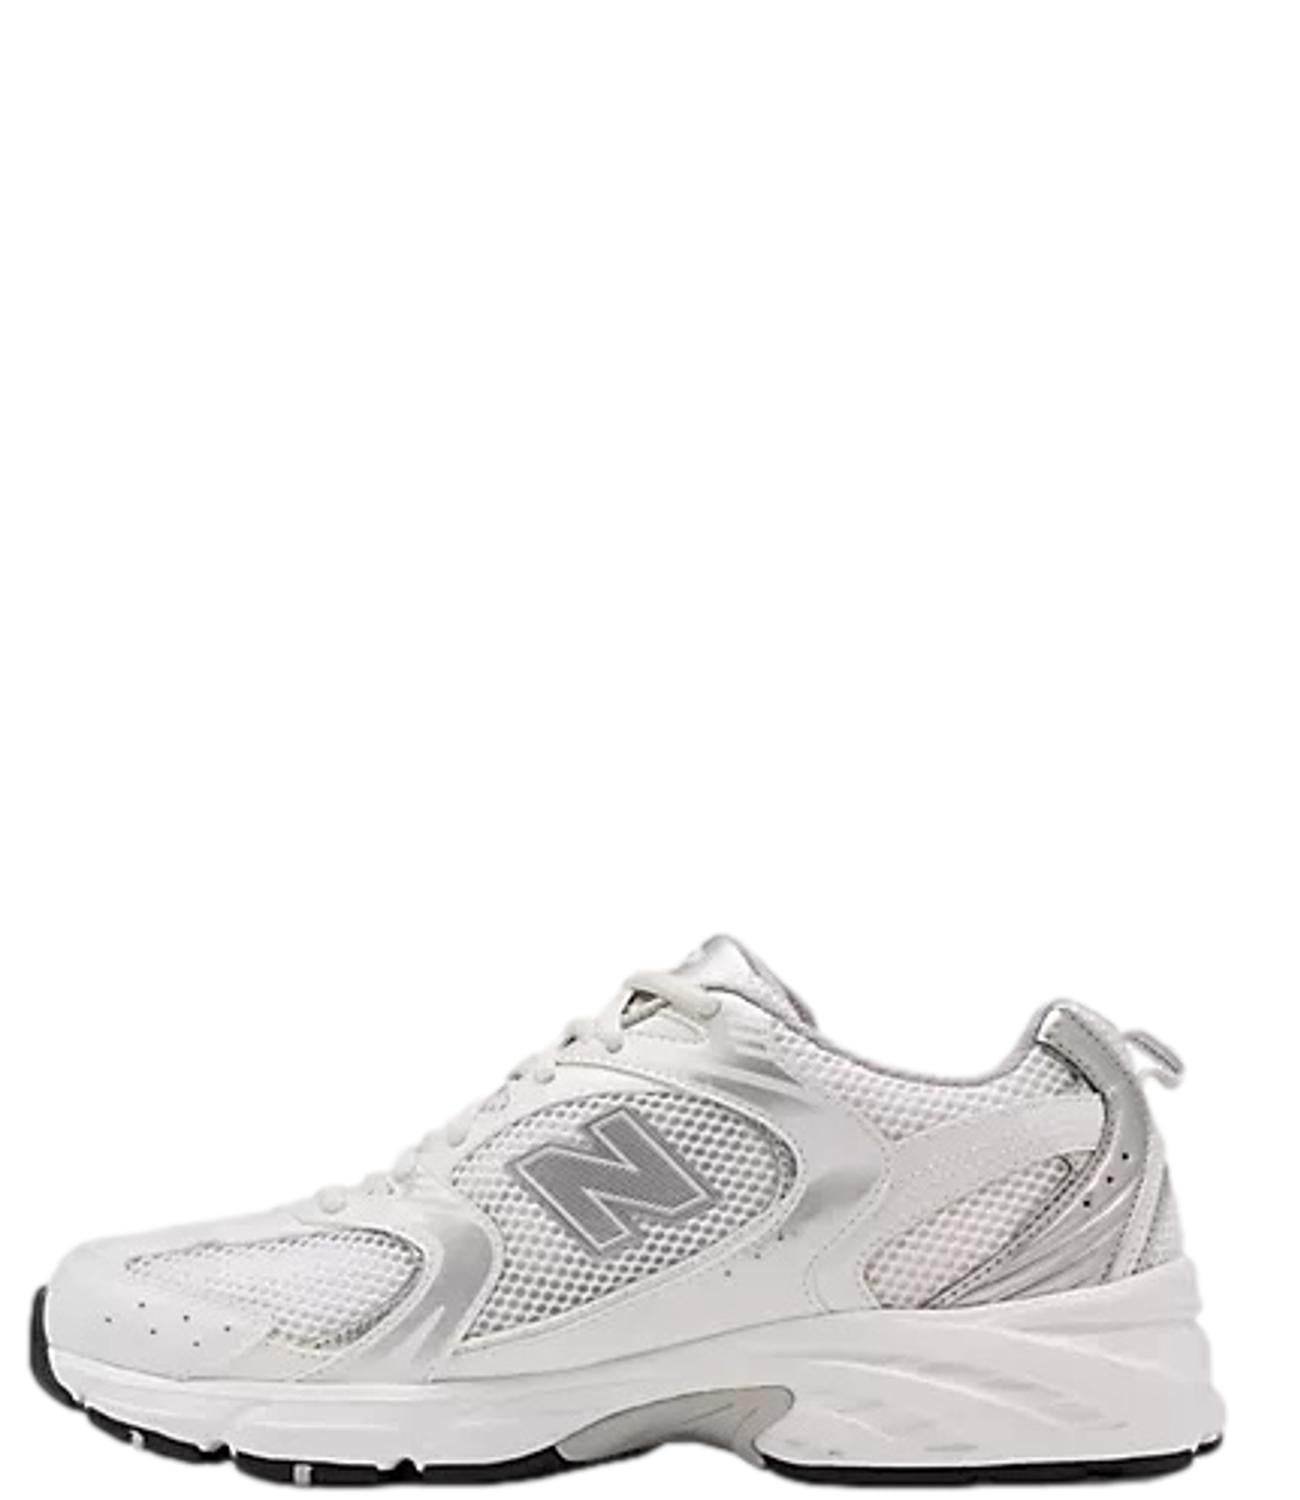 NEW BALANCE 530 Sneakers bianca e grigio argento